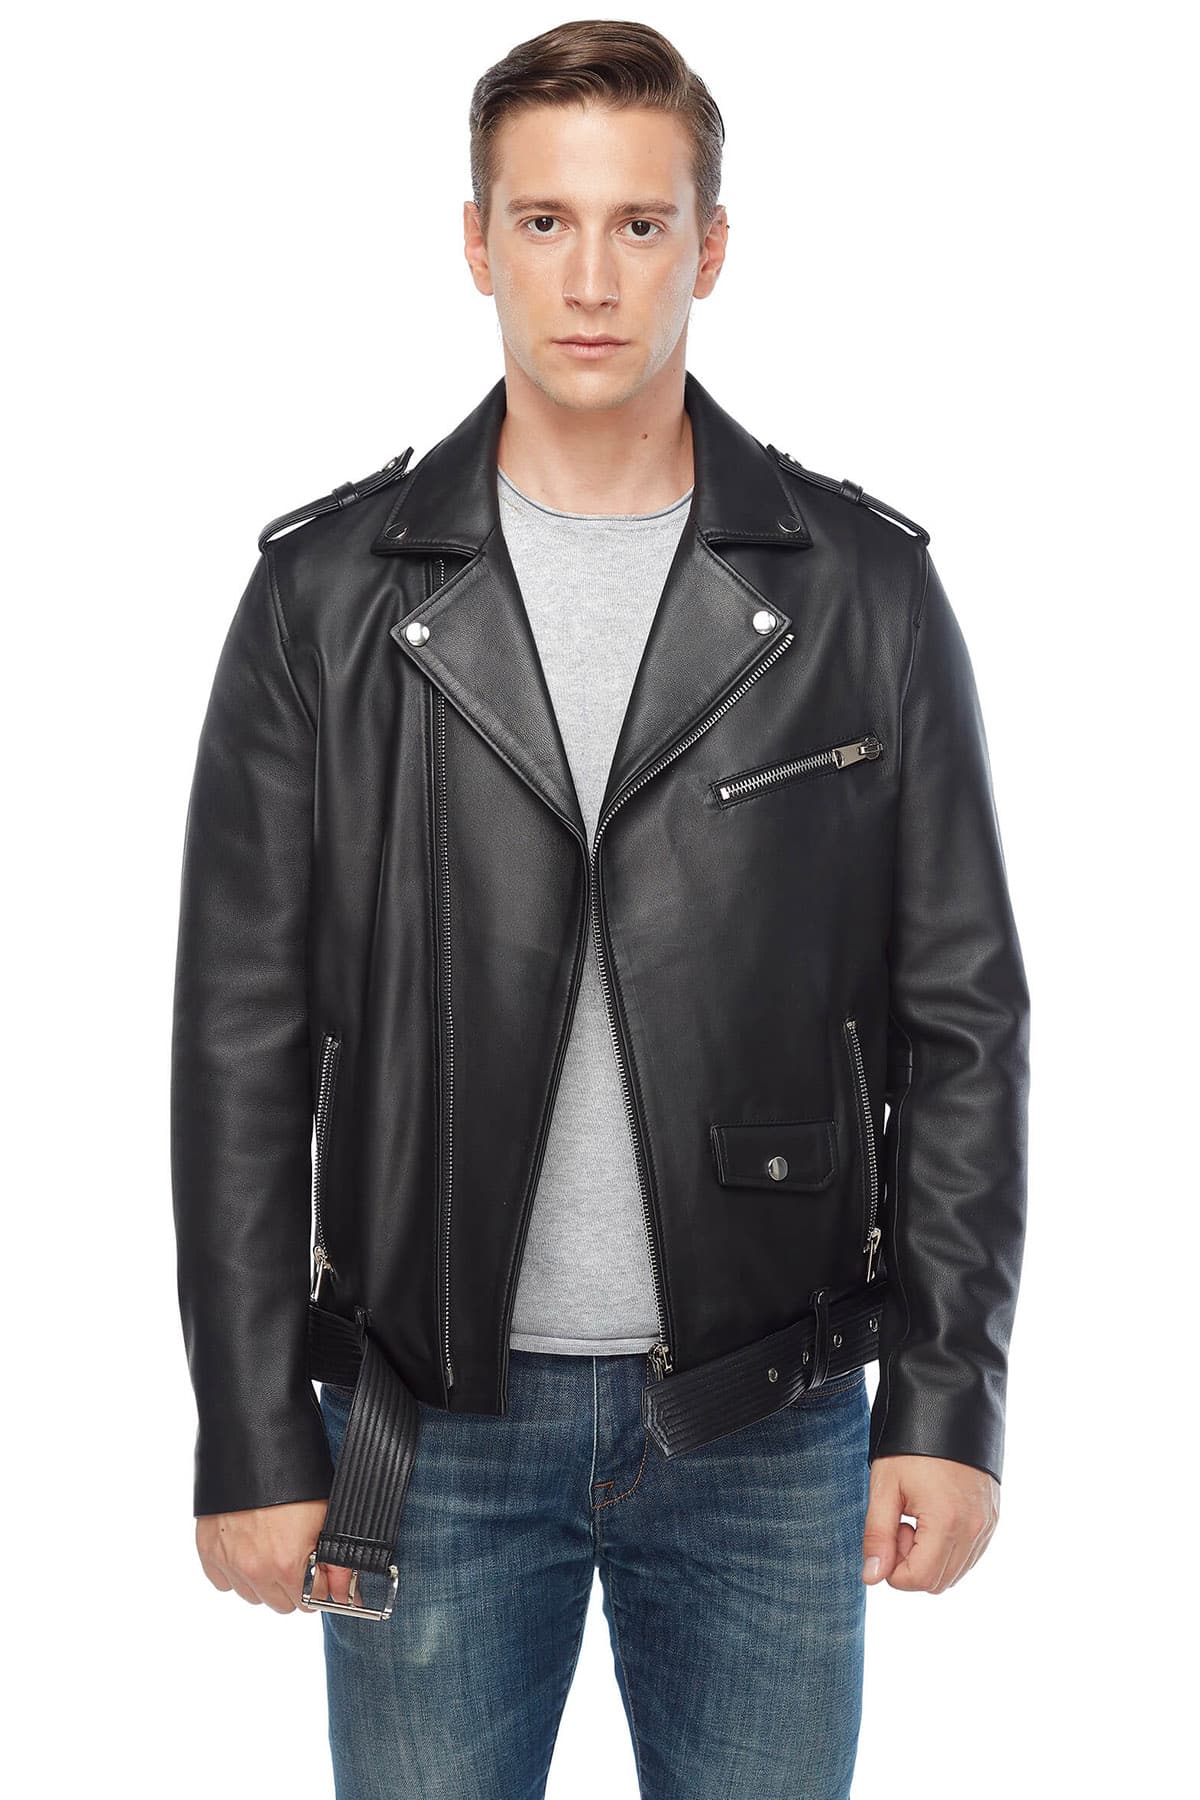 Urban Fashion Studio Lewis Tan Genuine Leather Biker Jacket Black